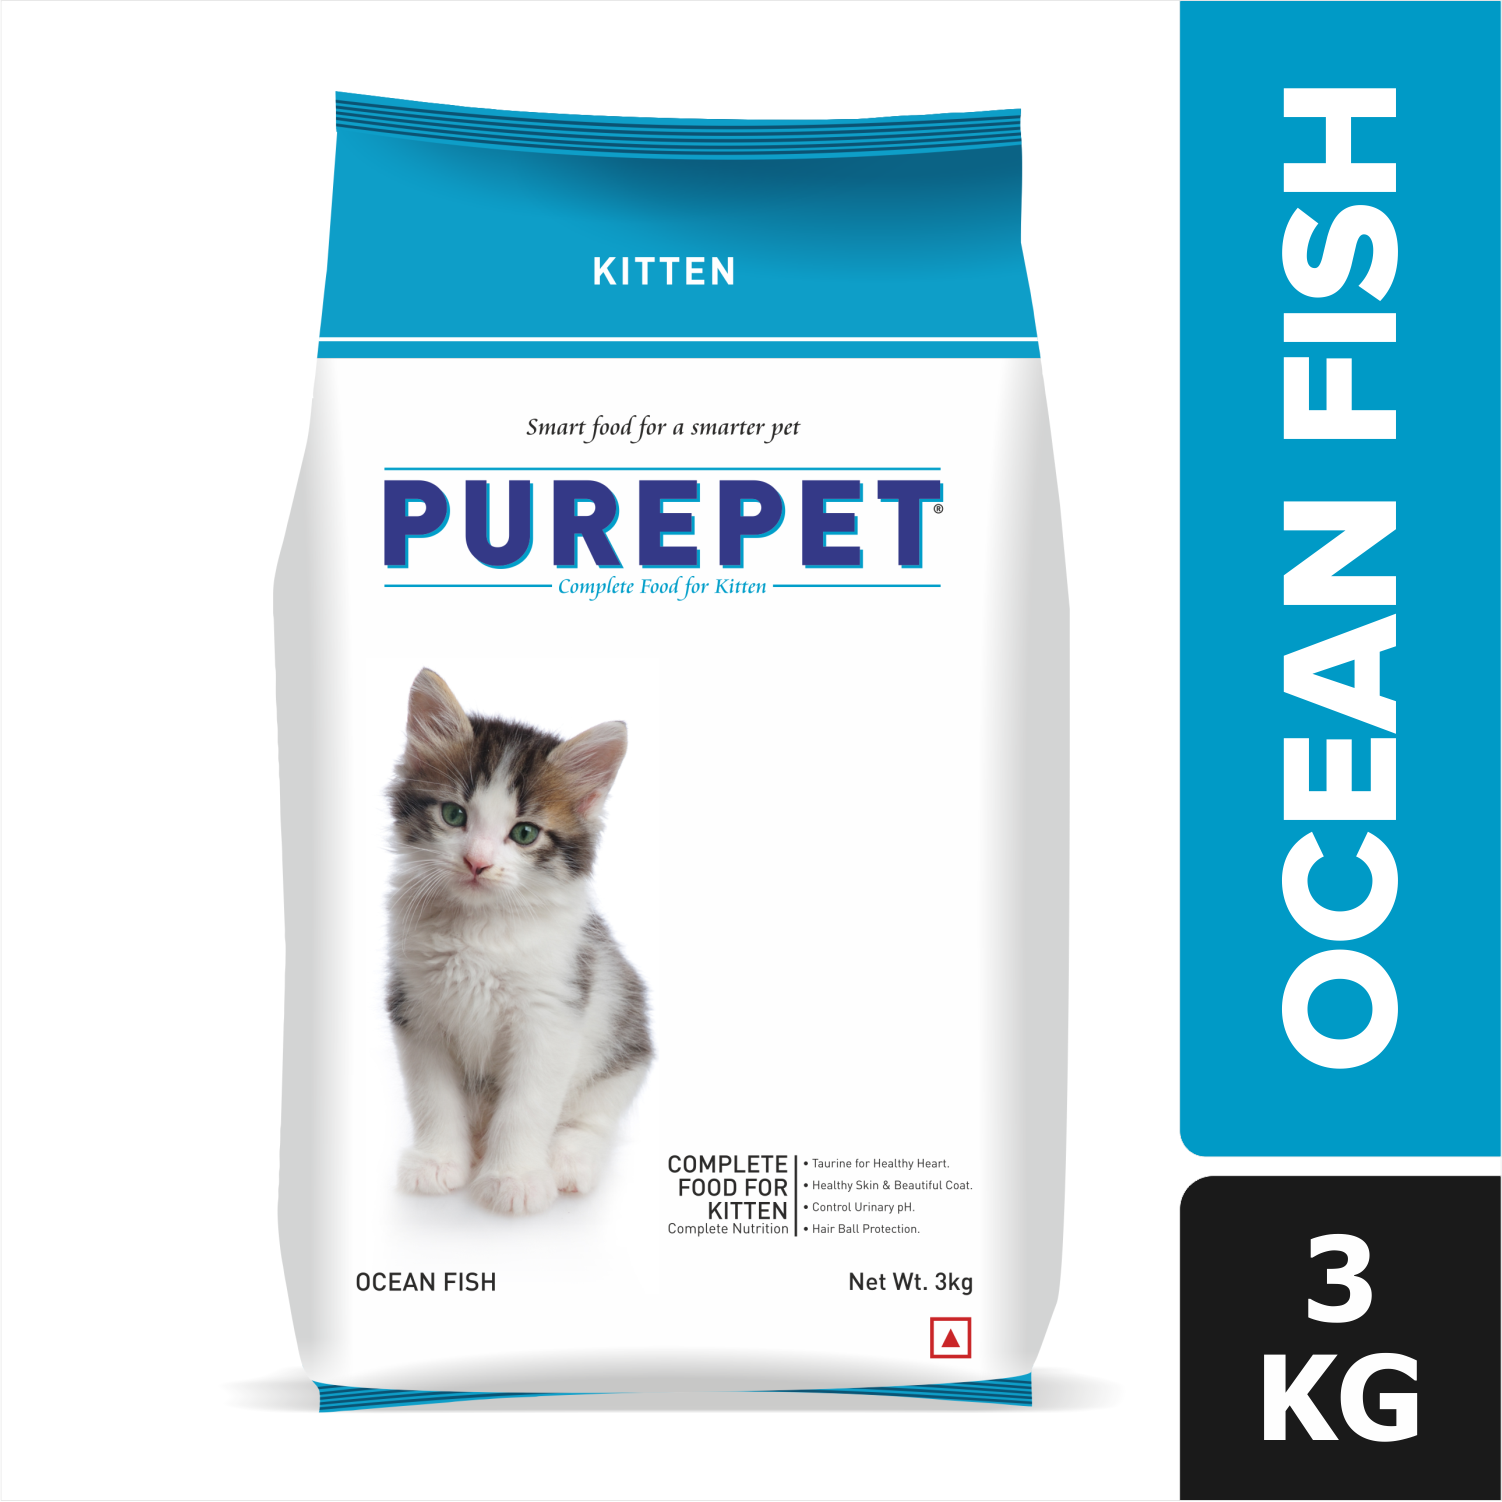 Purepet Ocean Fish Kitten Dry Food